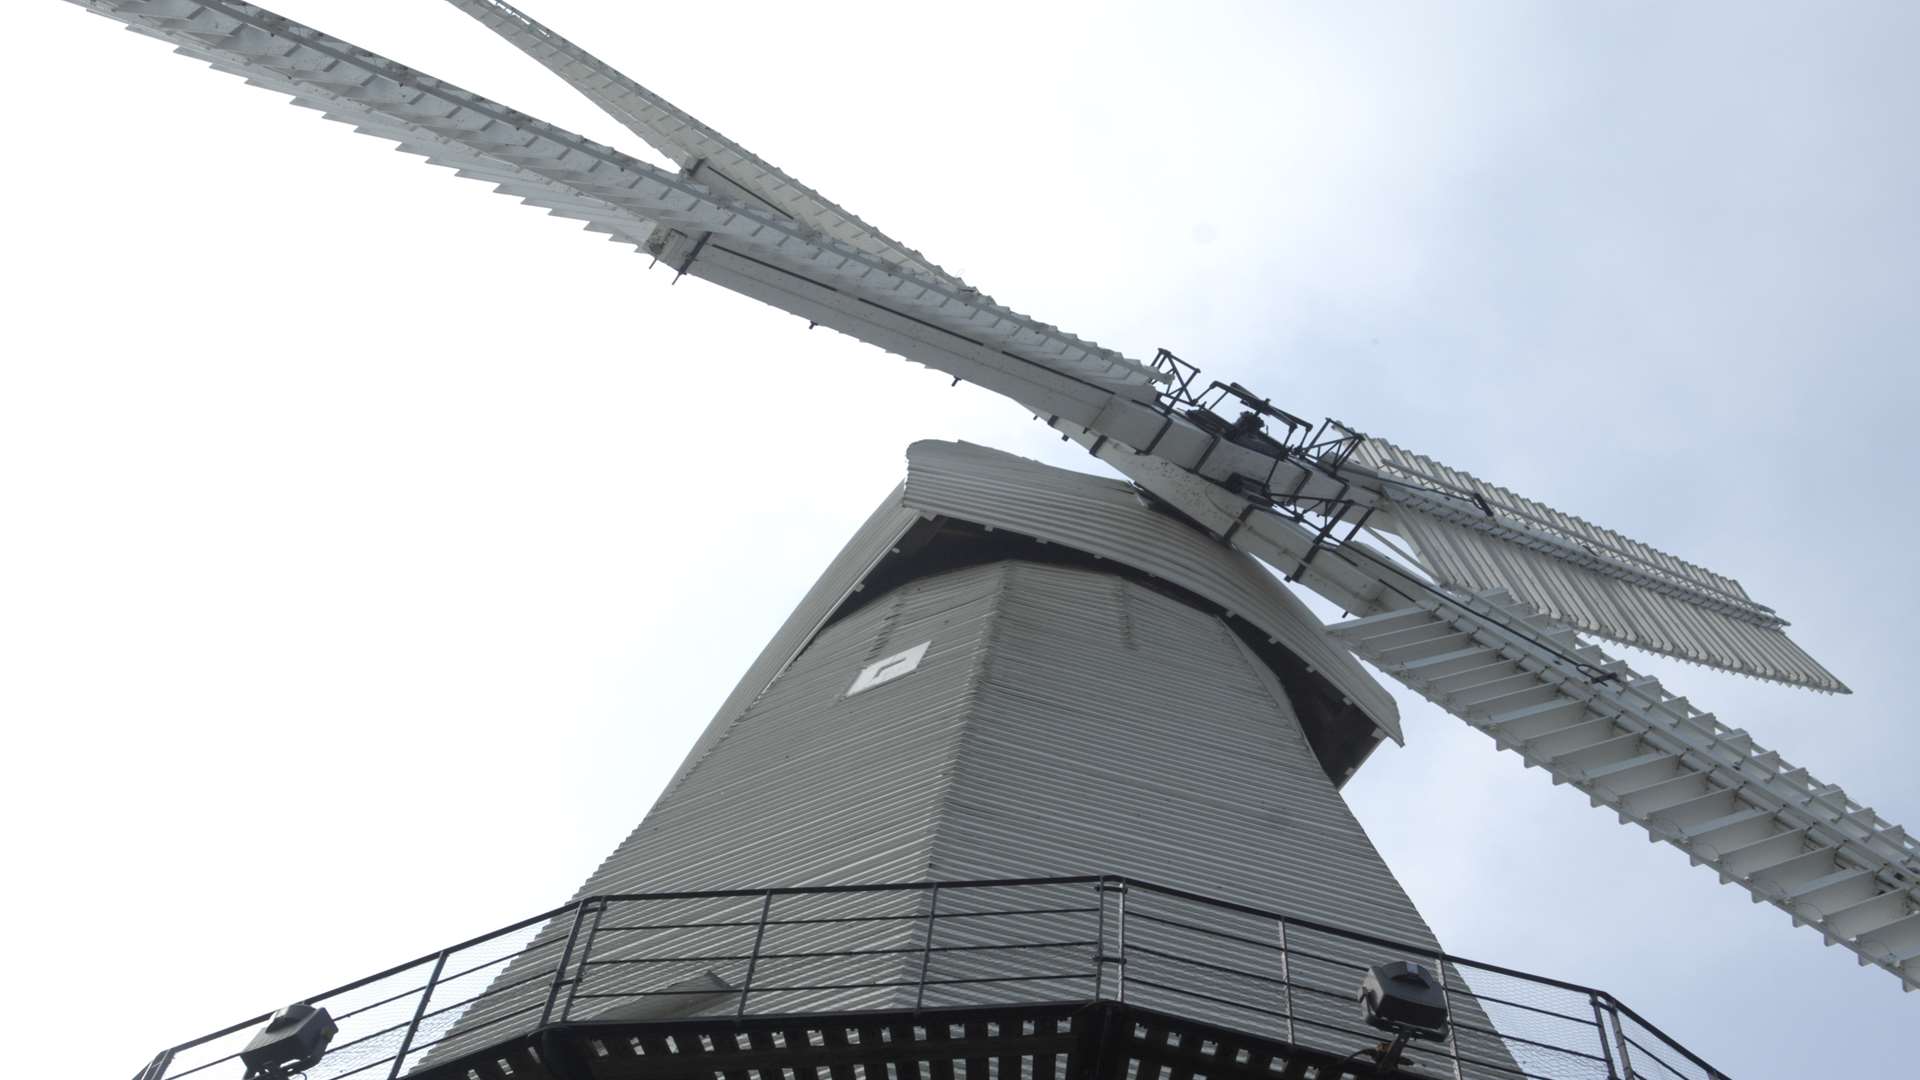 Cranbrook Windmill